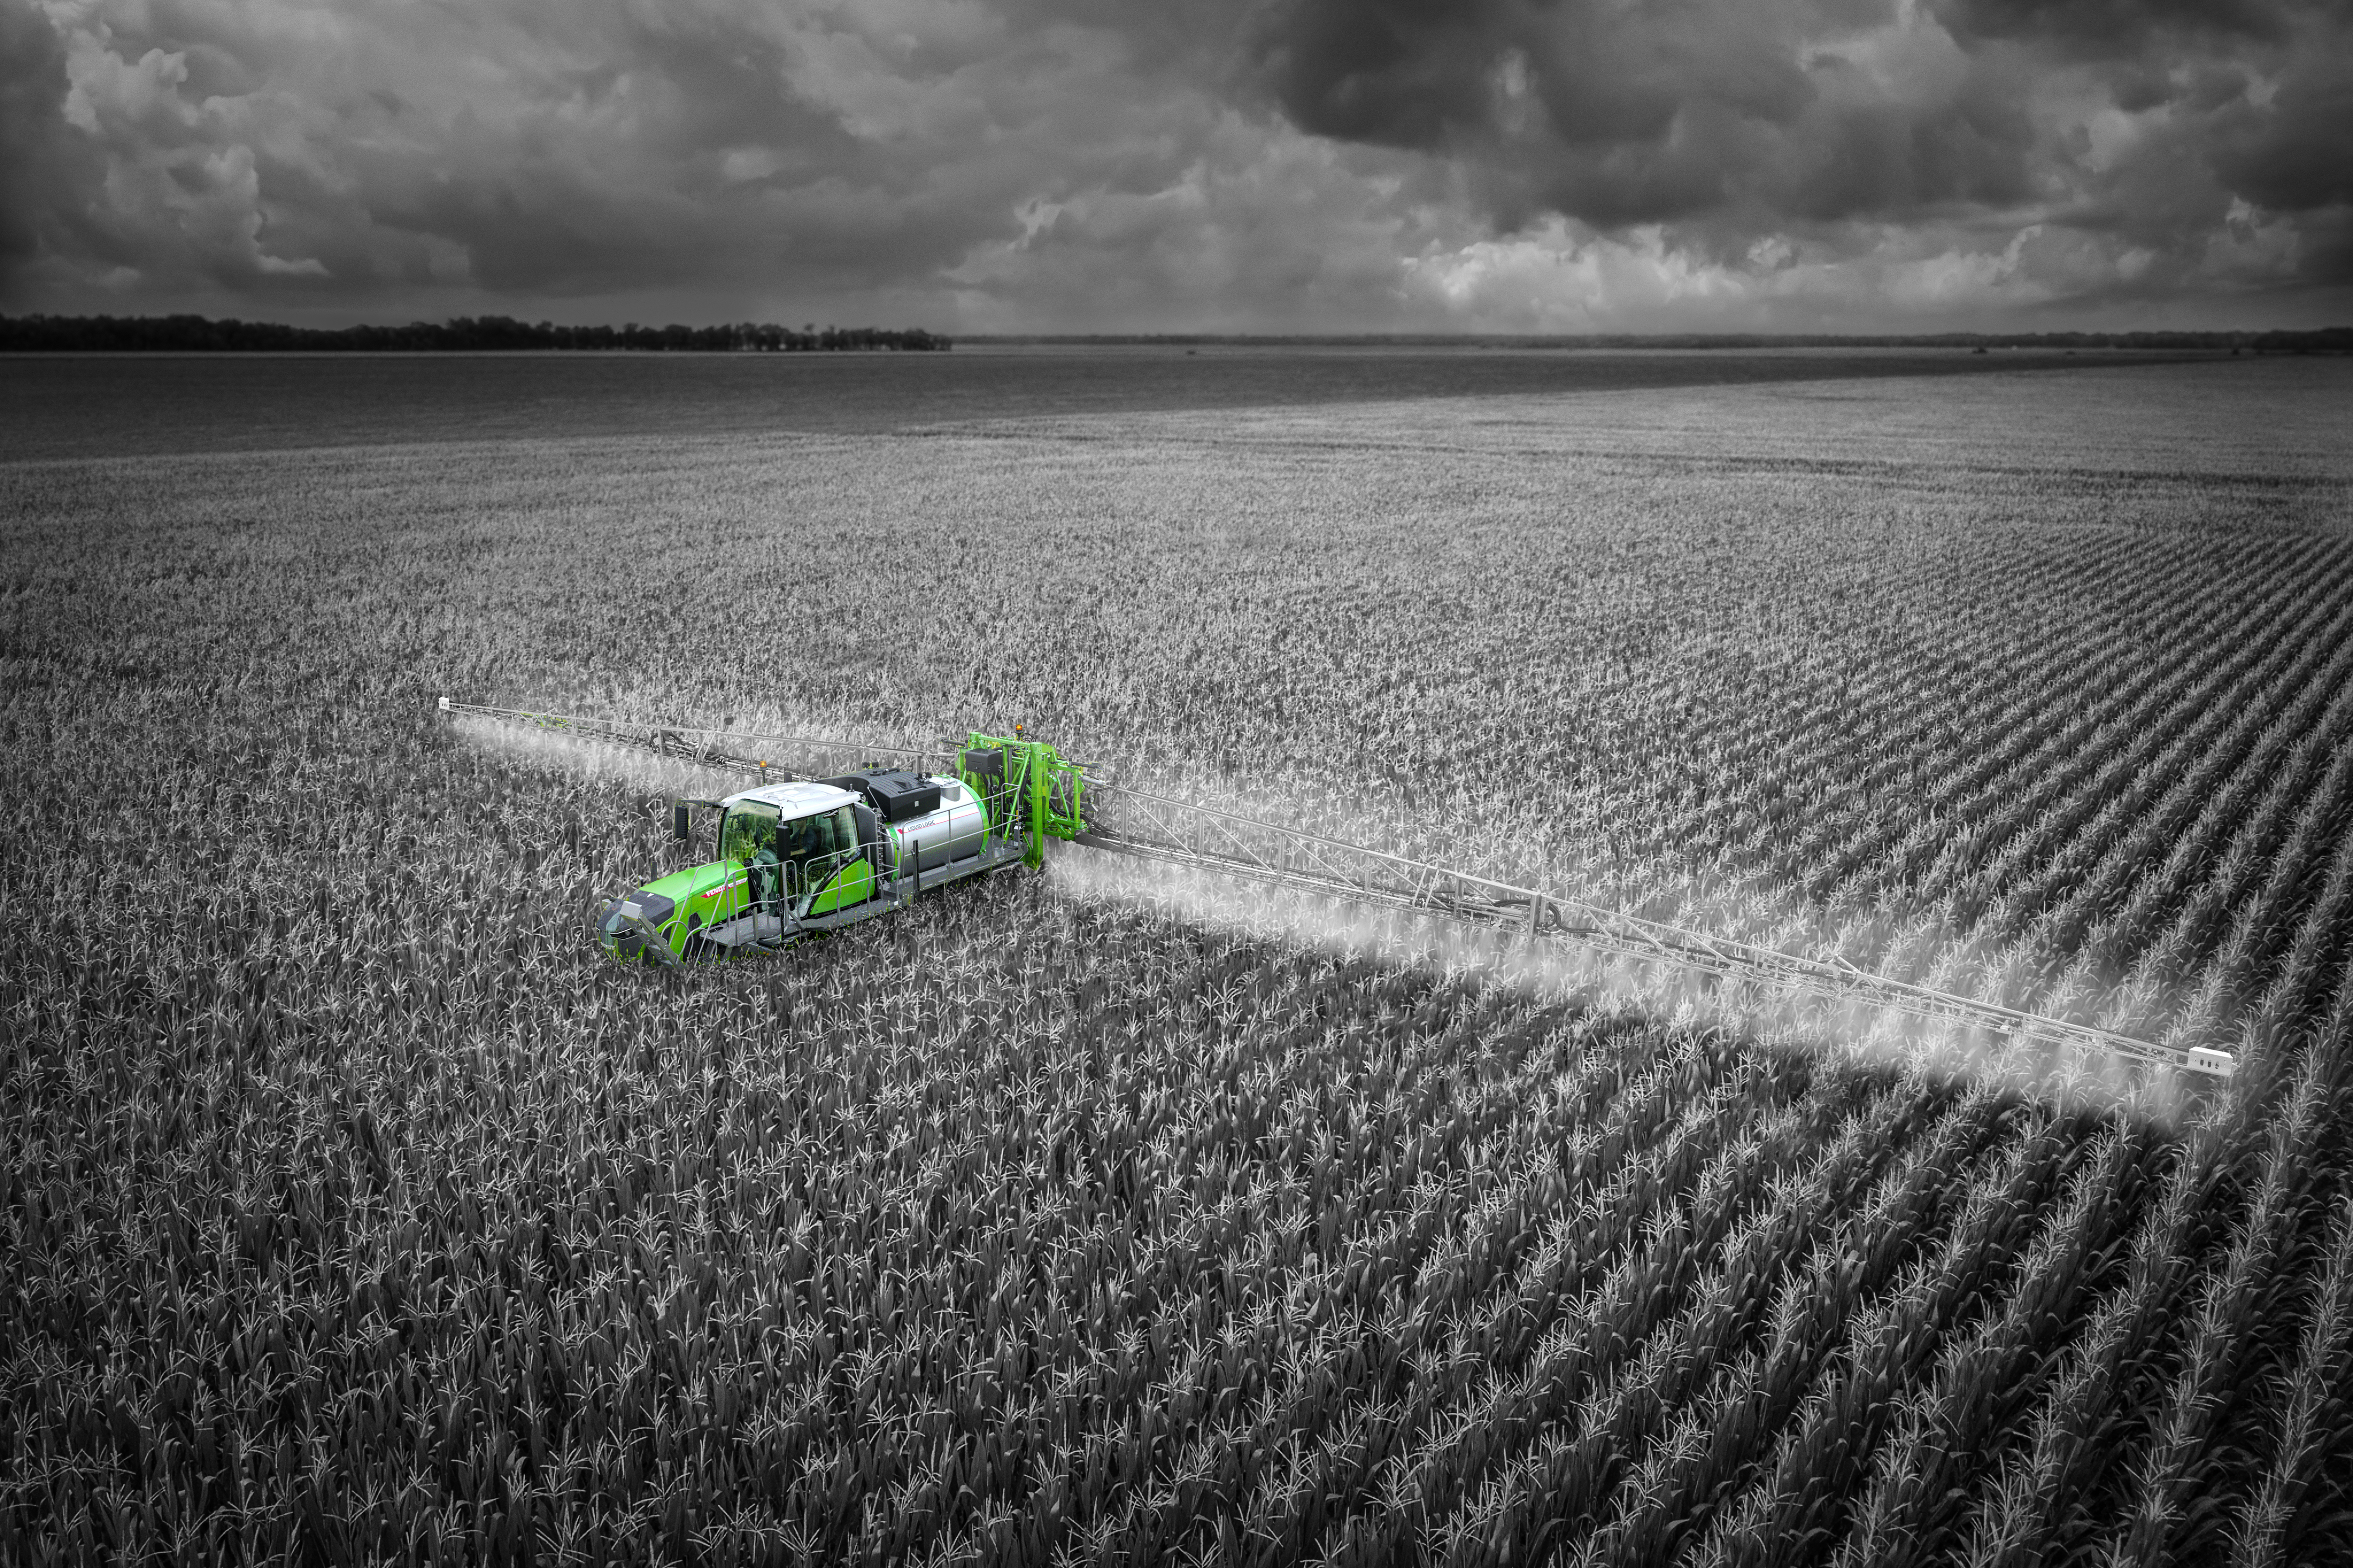 Applicator in action in corn field